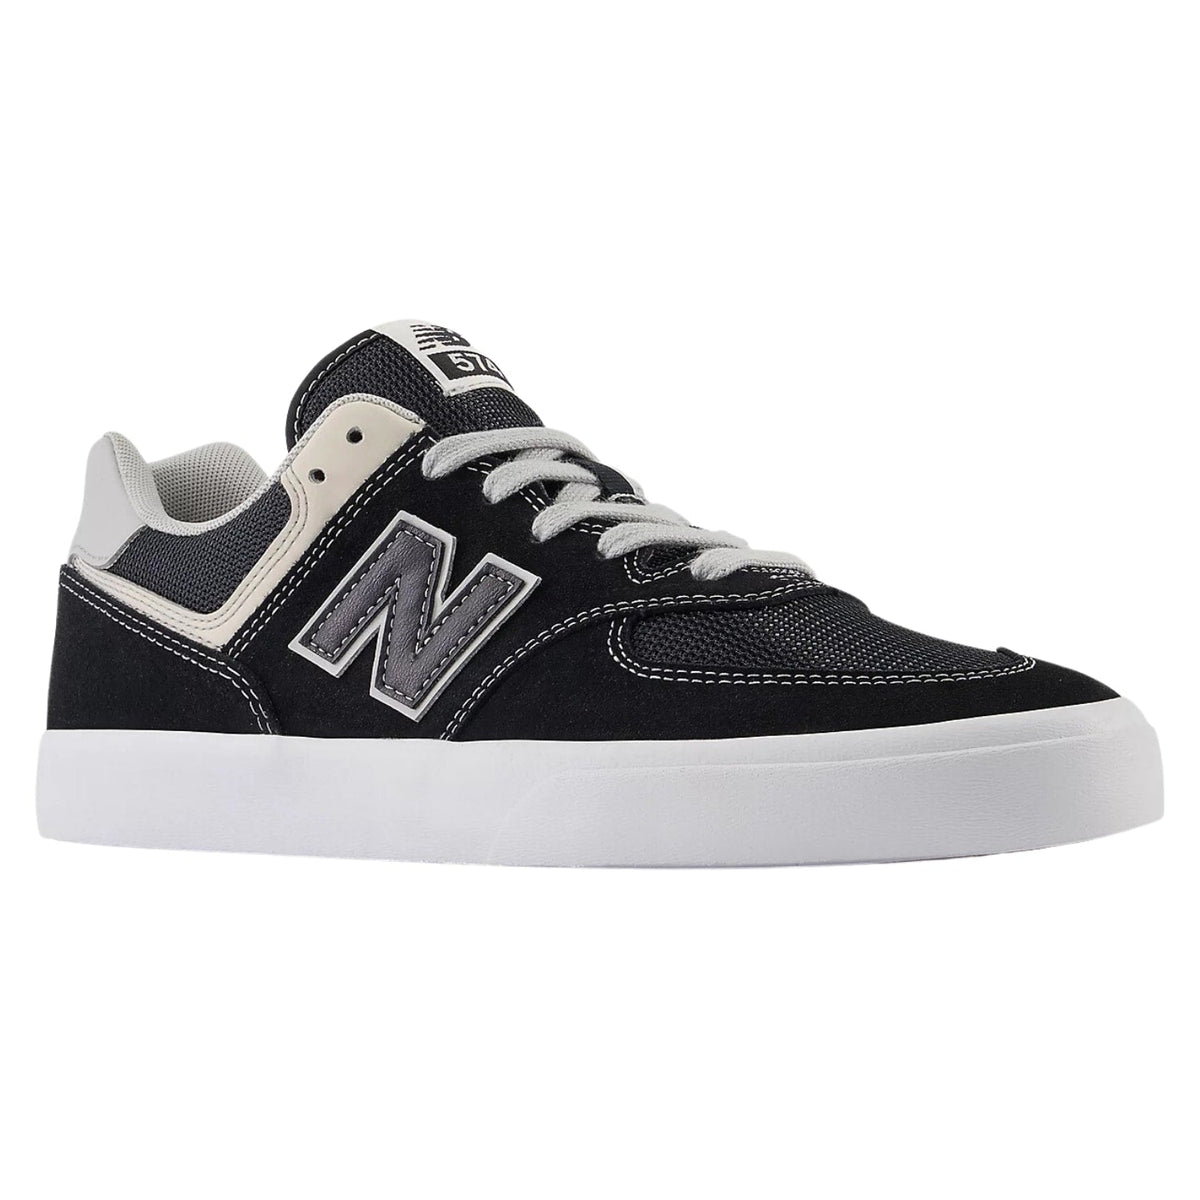 New Balance Numeric Nm574 Skate Shoes - Black/Grey - Mens Skate Shoes by New Balance Numeric